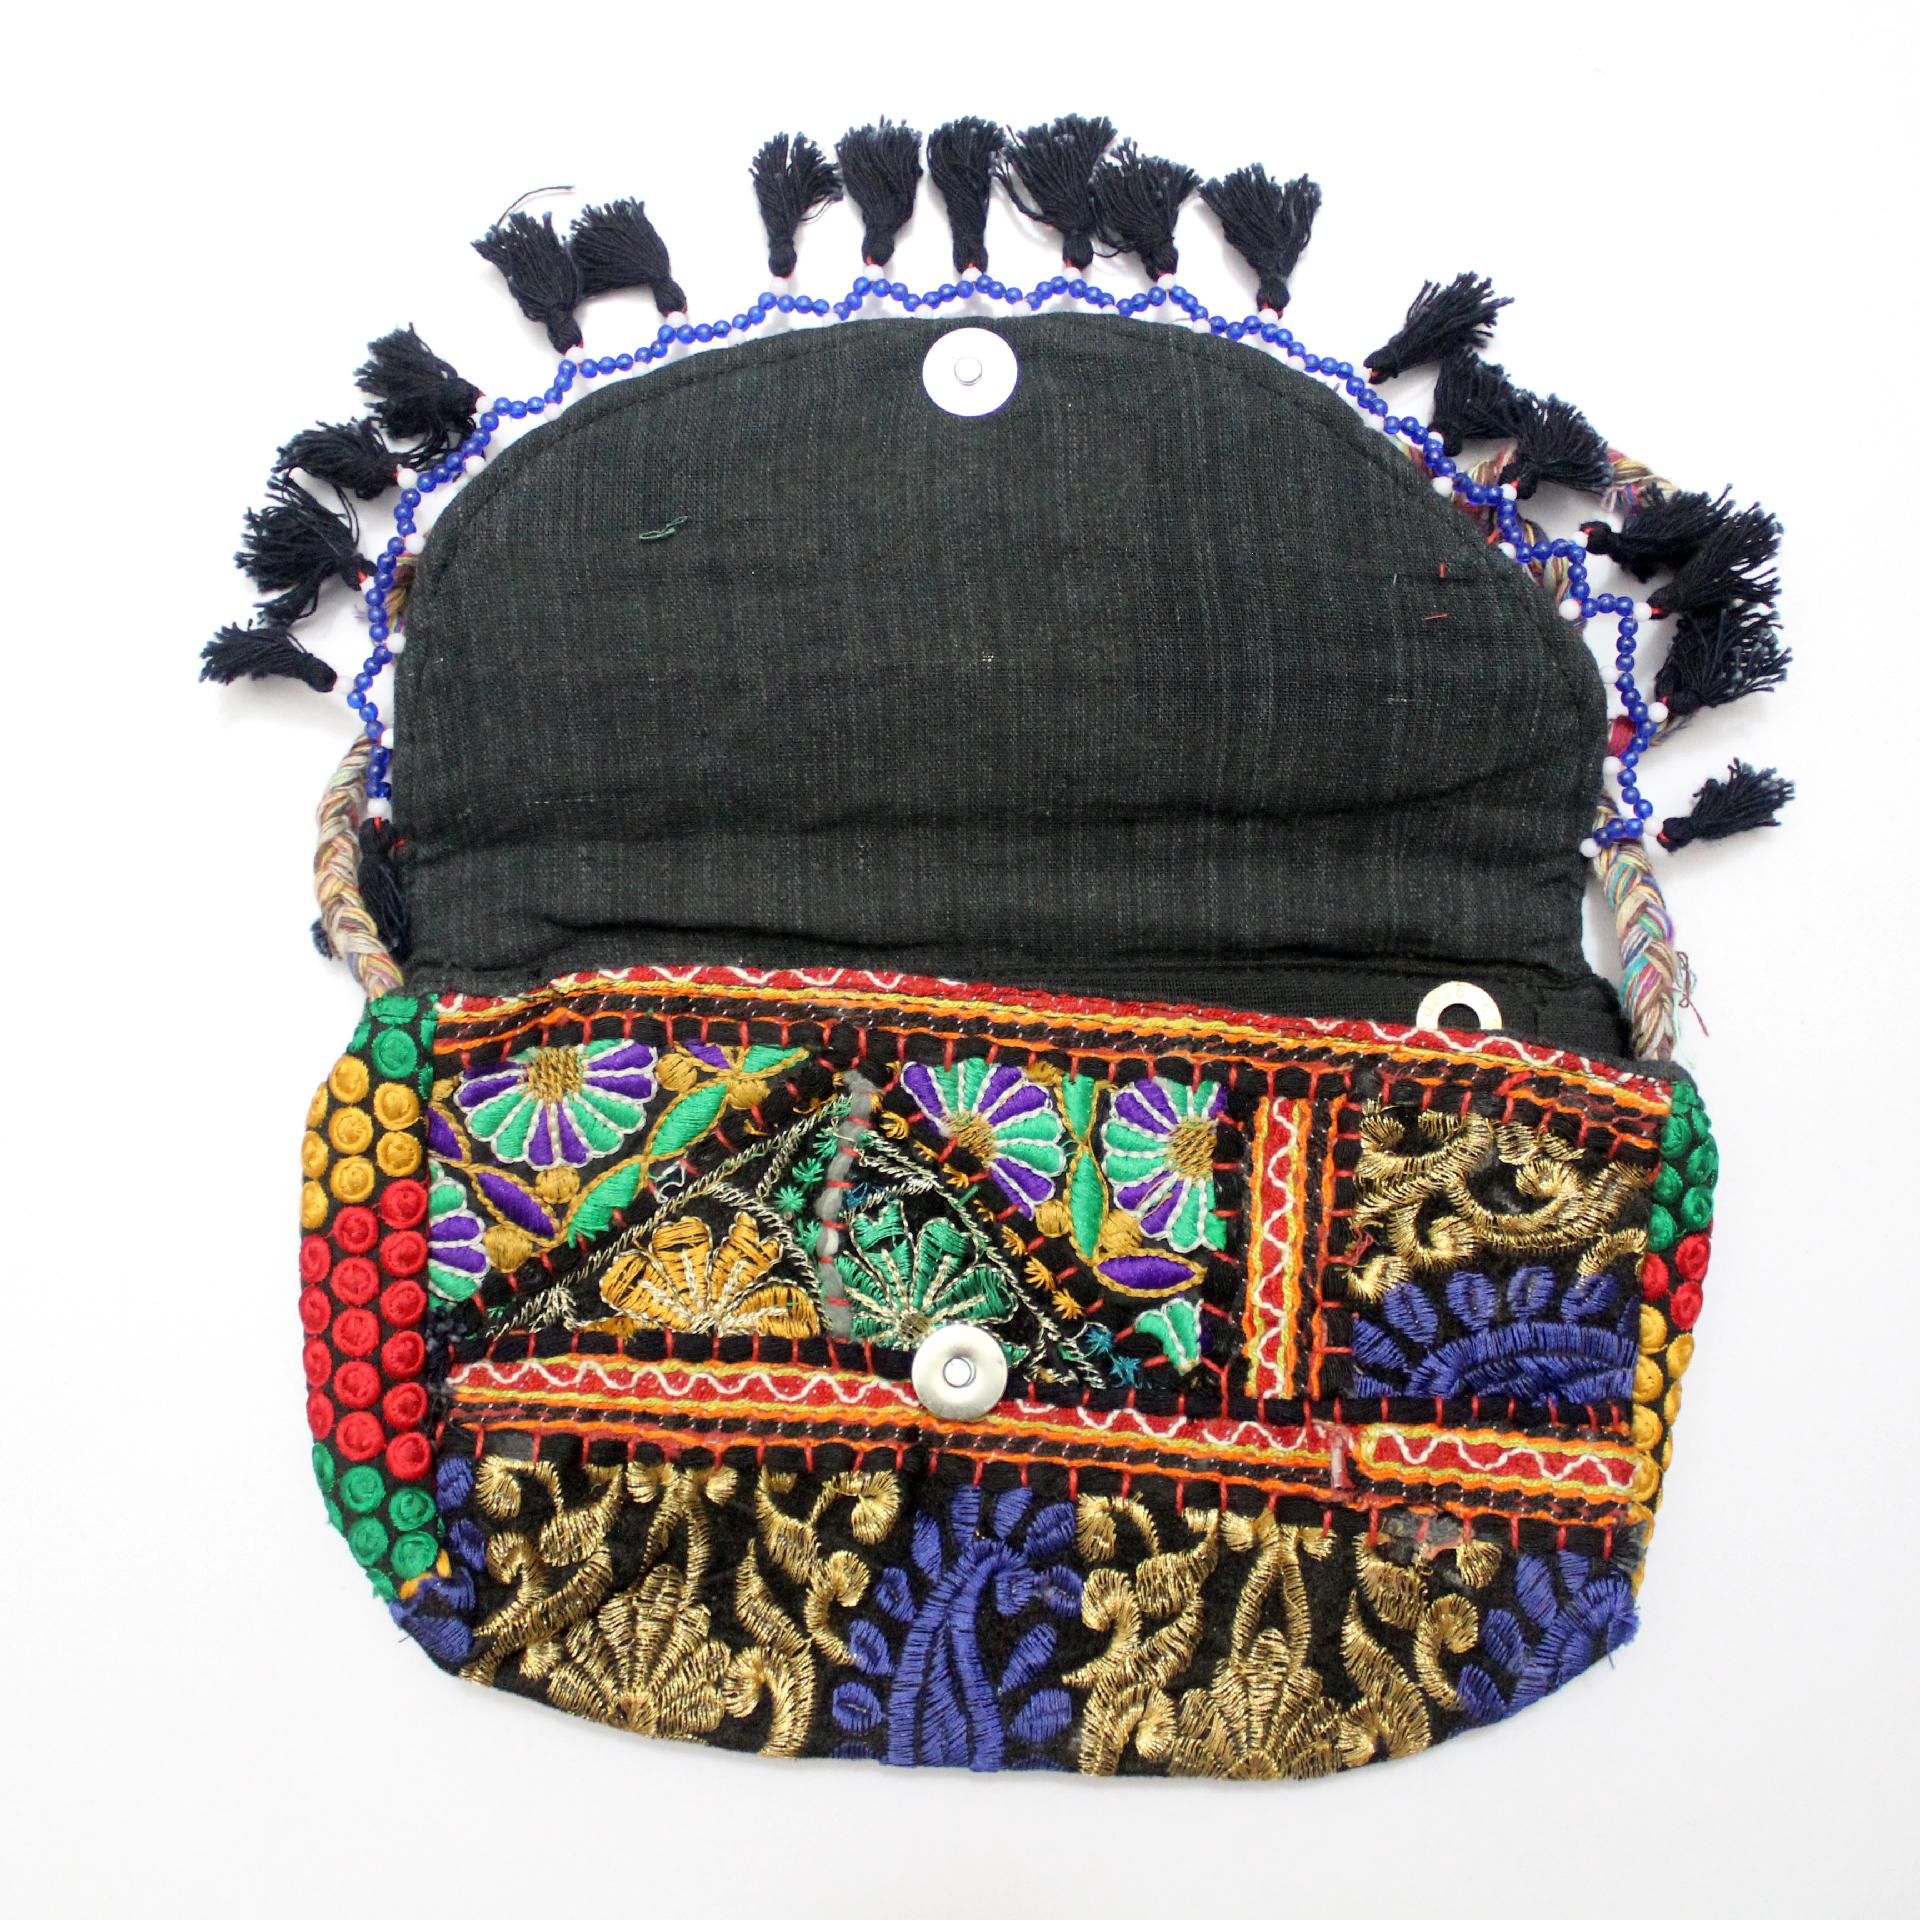 Vintage Tribal Banjara Indian Handmade Ethnic Women Boho Embroidered Clutch Bag | eBay